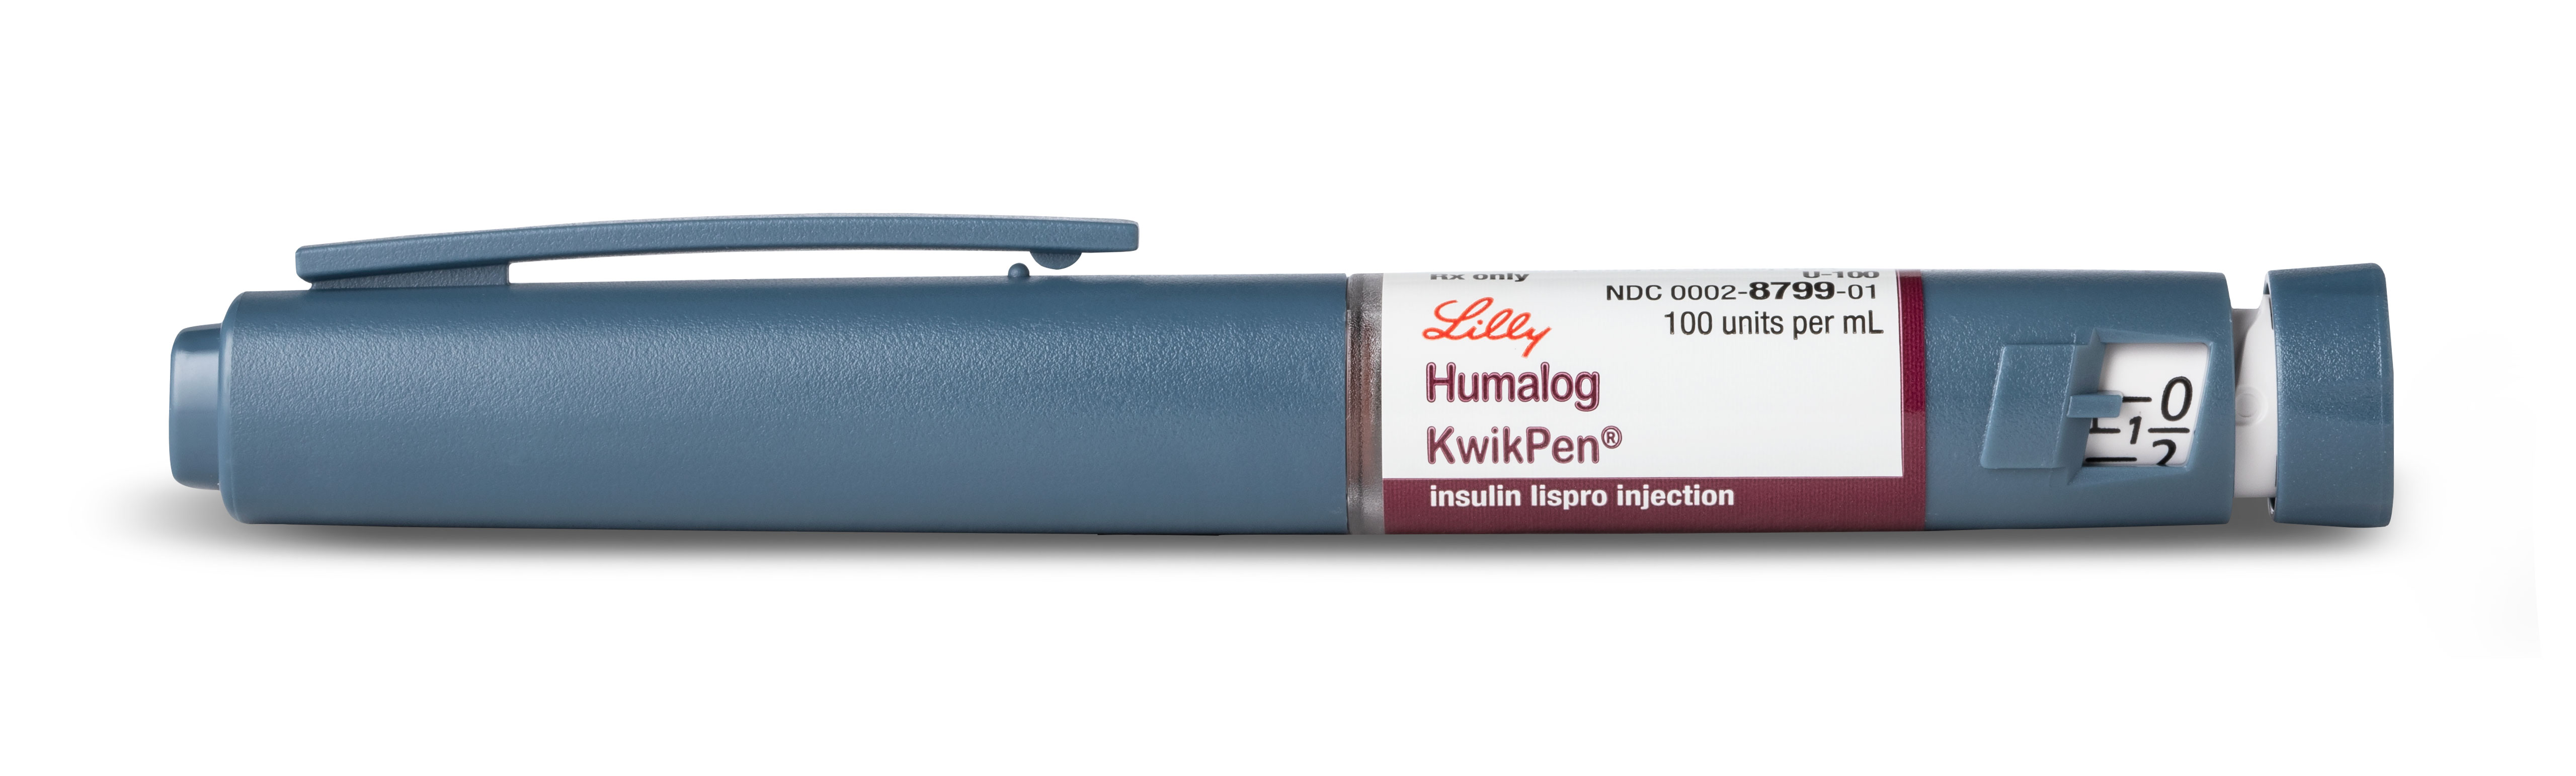 How To Use U 100 U 0 Kwikpen Humalog Insulin Lispro Injection